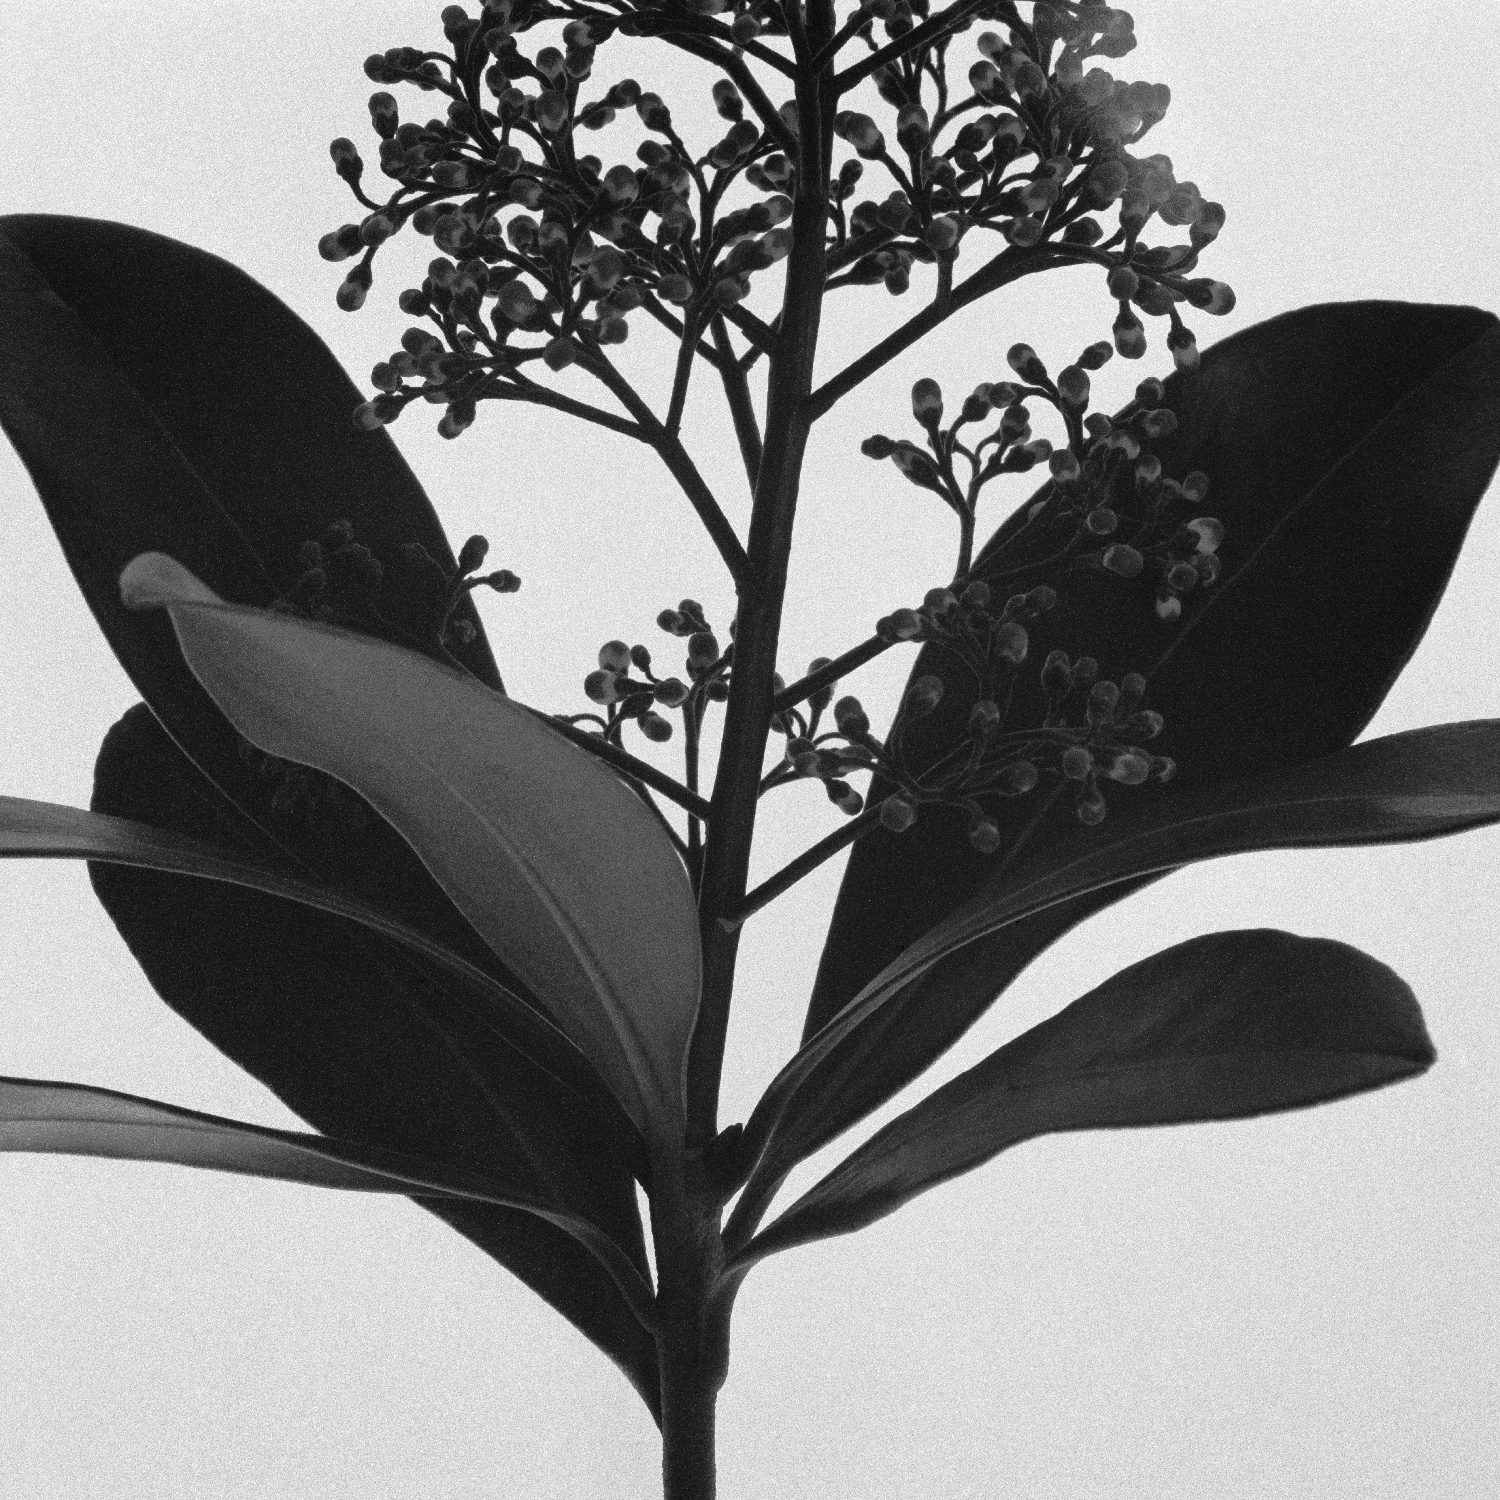 A Study of Ornamental Plant by Iana Mizguina